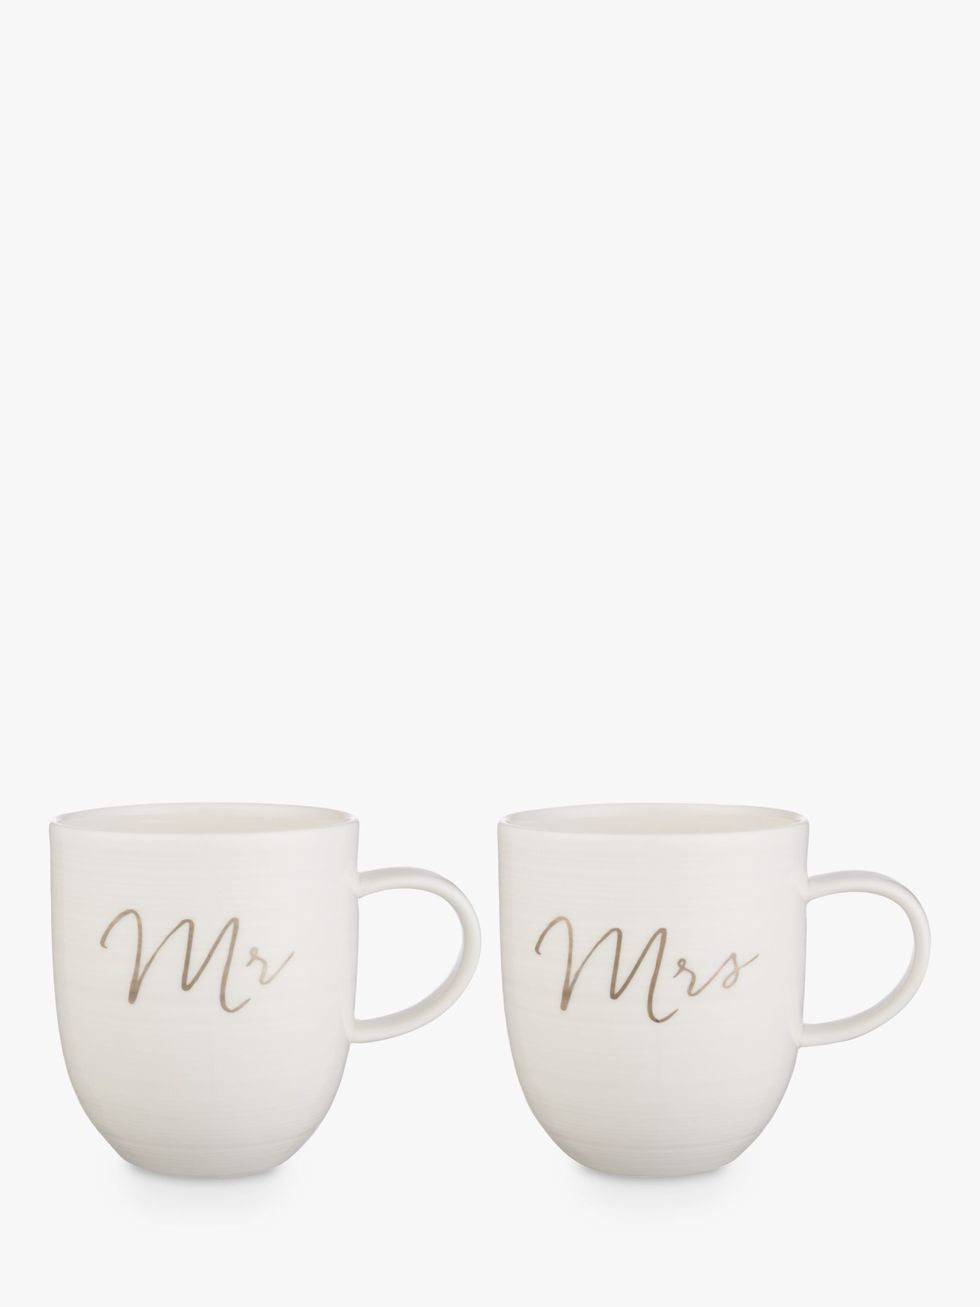 Mr & Mrs Mugs, Set of 2, Natural